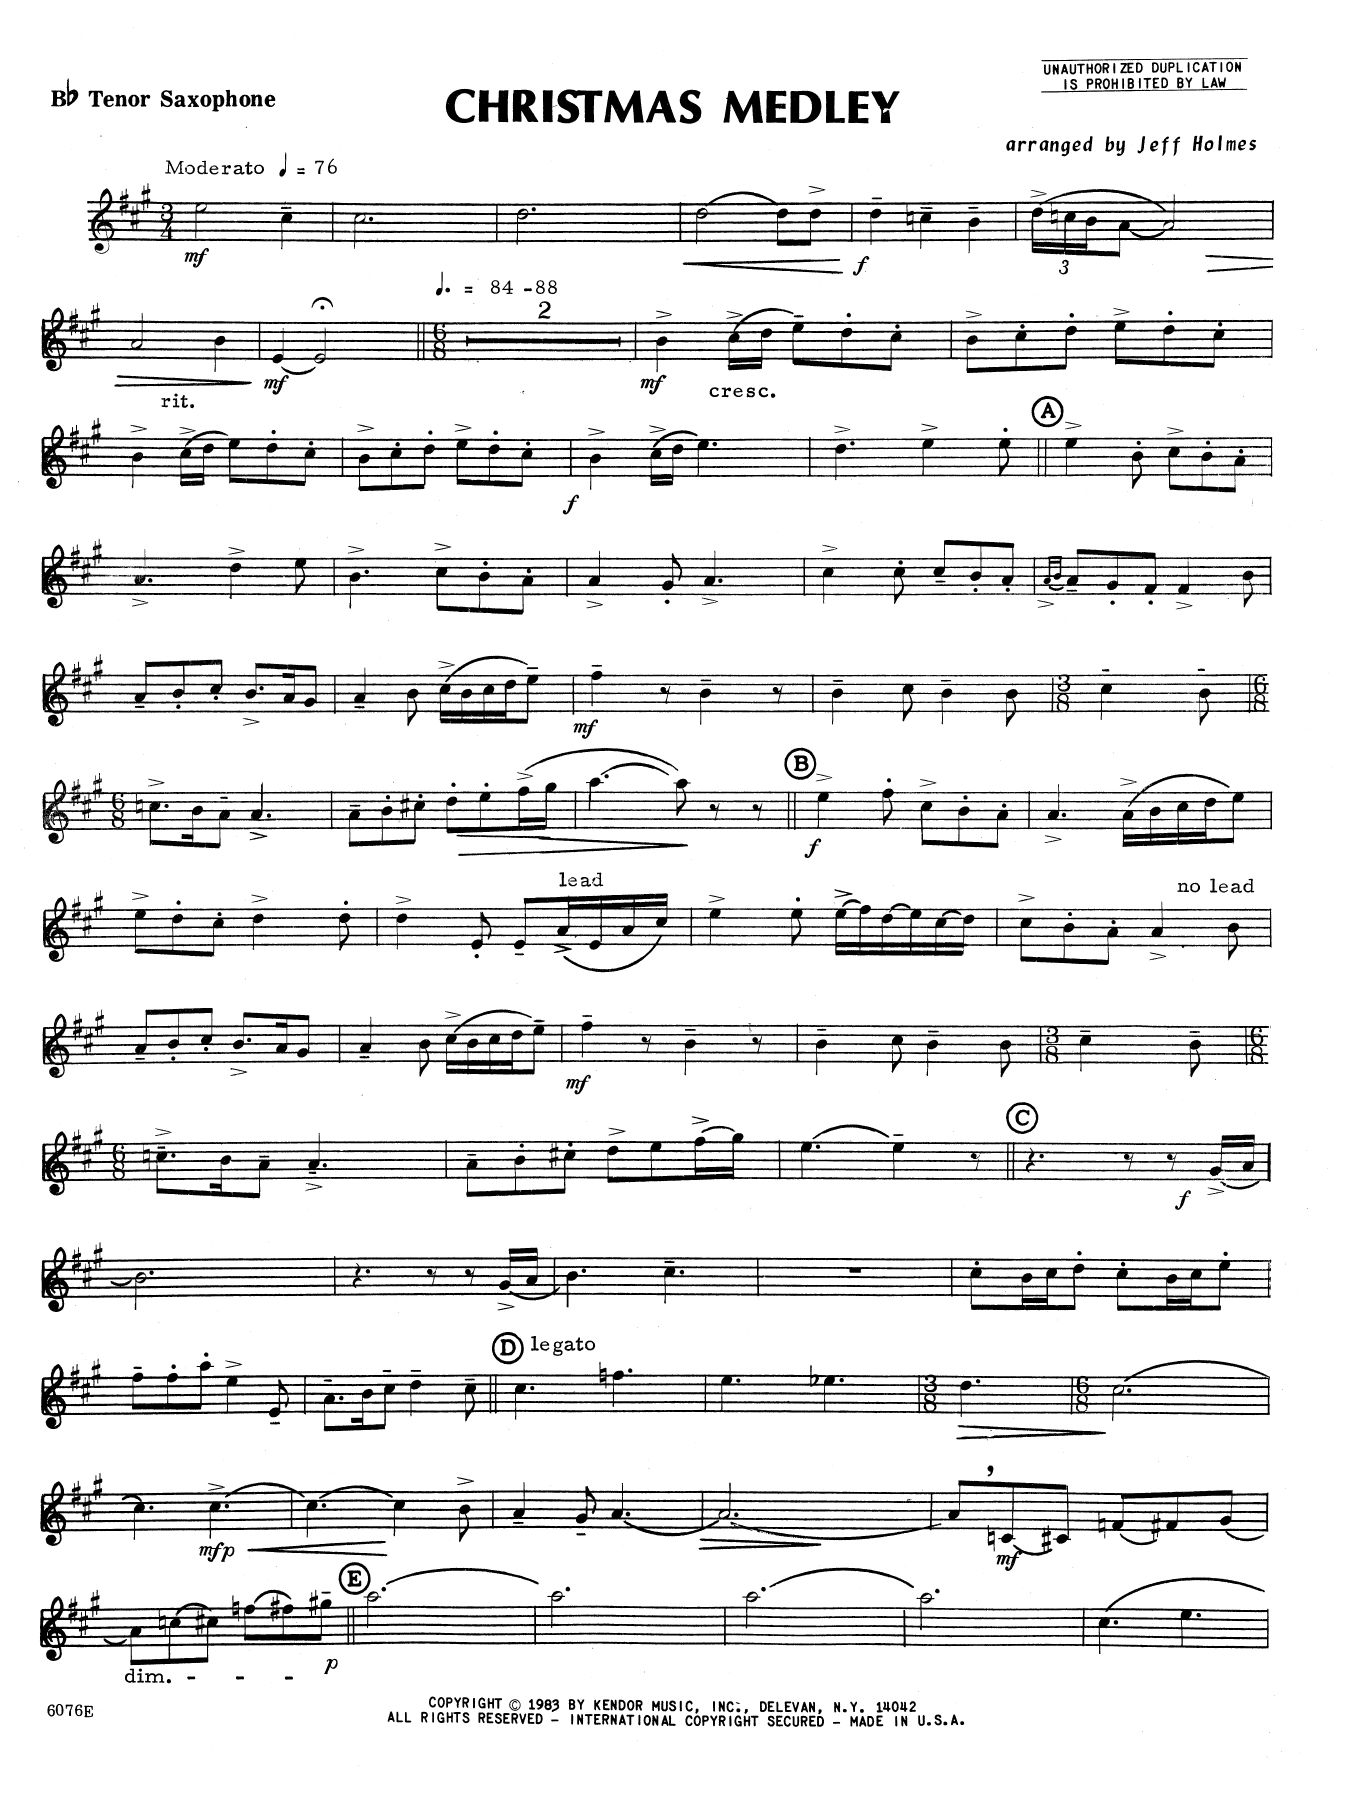 Holmes Christmas Medley - Bb Tenor Saxophone sheet music notes and chords. Download Printable PDF.